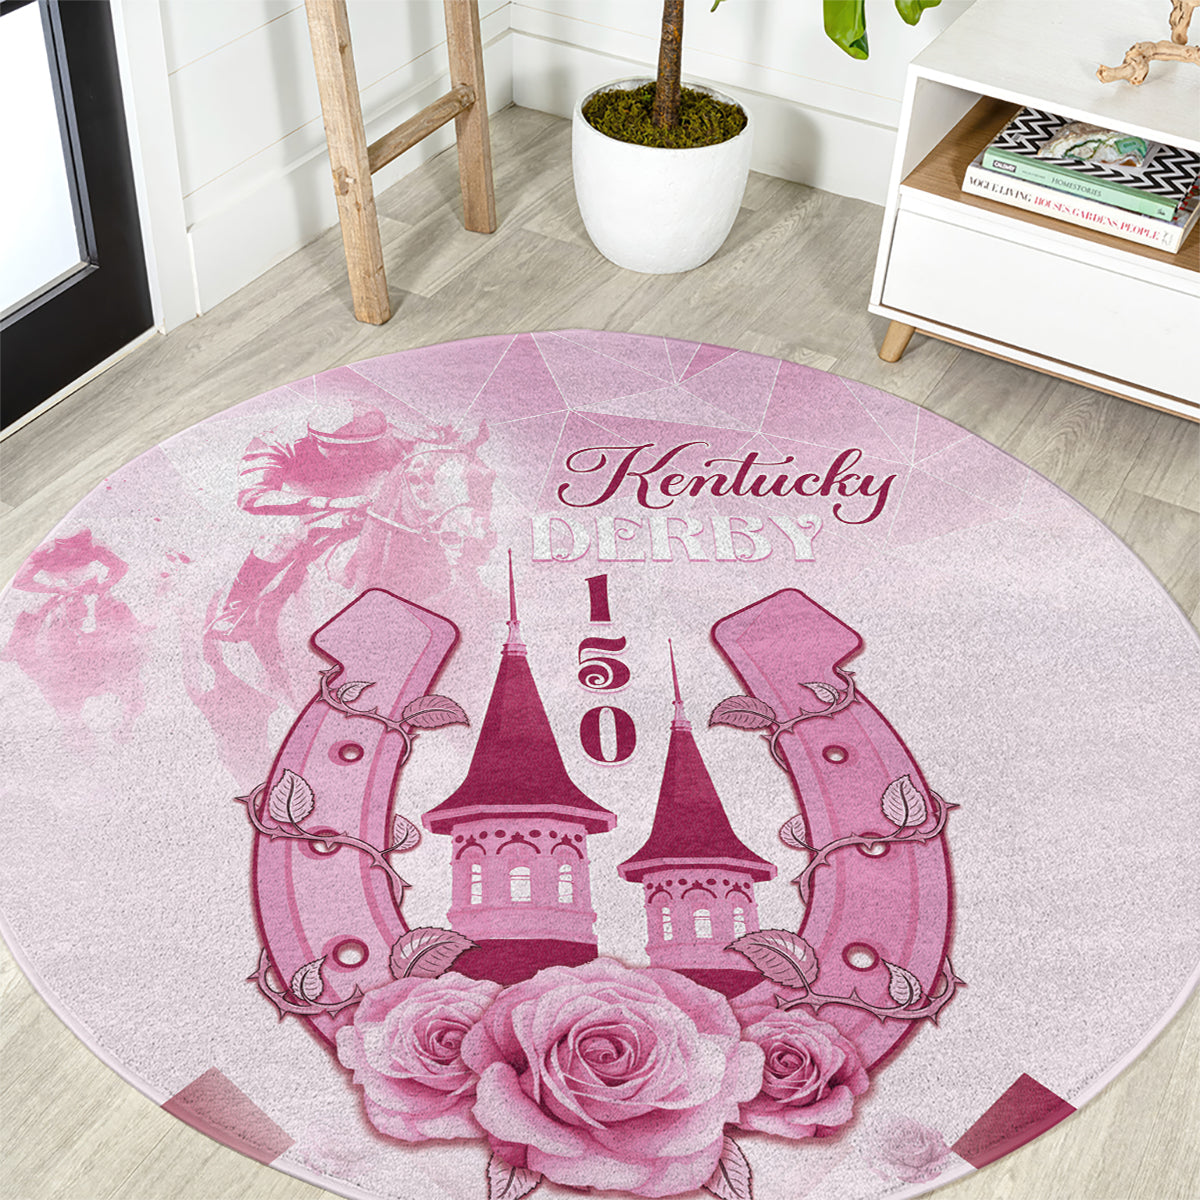 Kentucky Horse Racing Round Carpet 150th Anniversary Pink Version